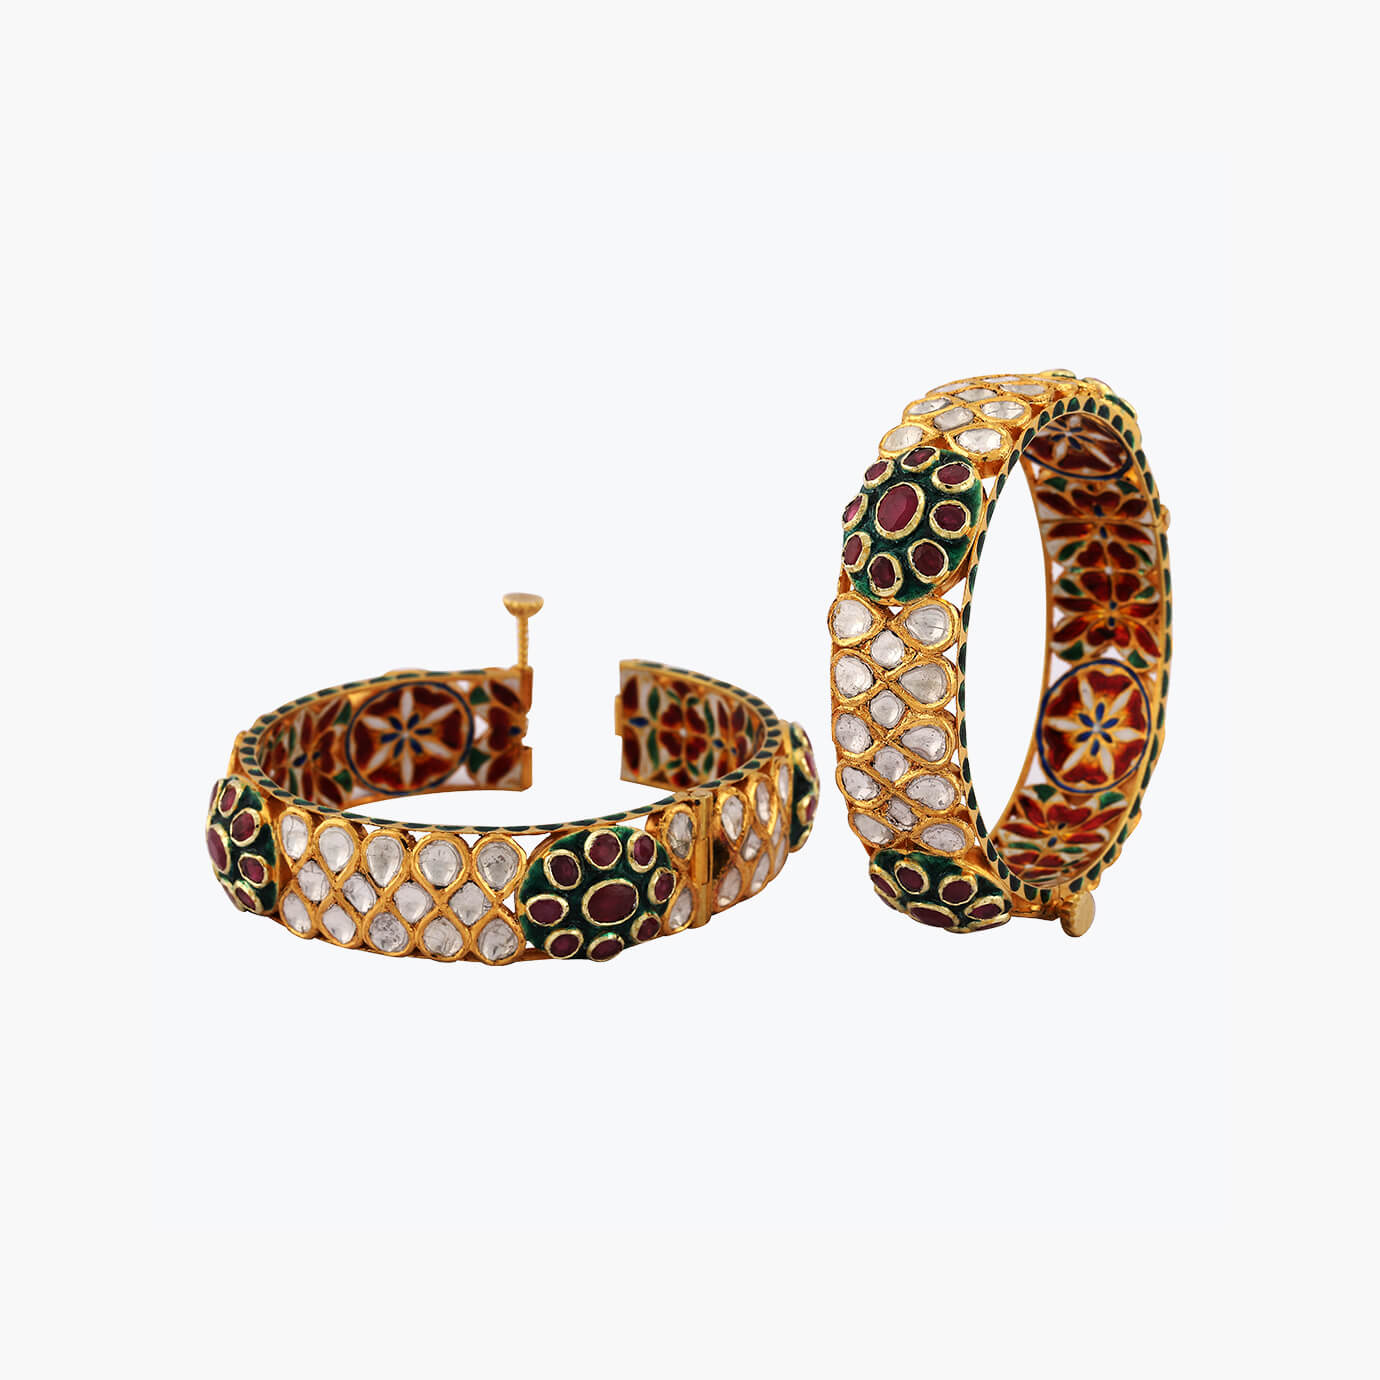 Bracelets Archives - Anmol Jewellers